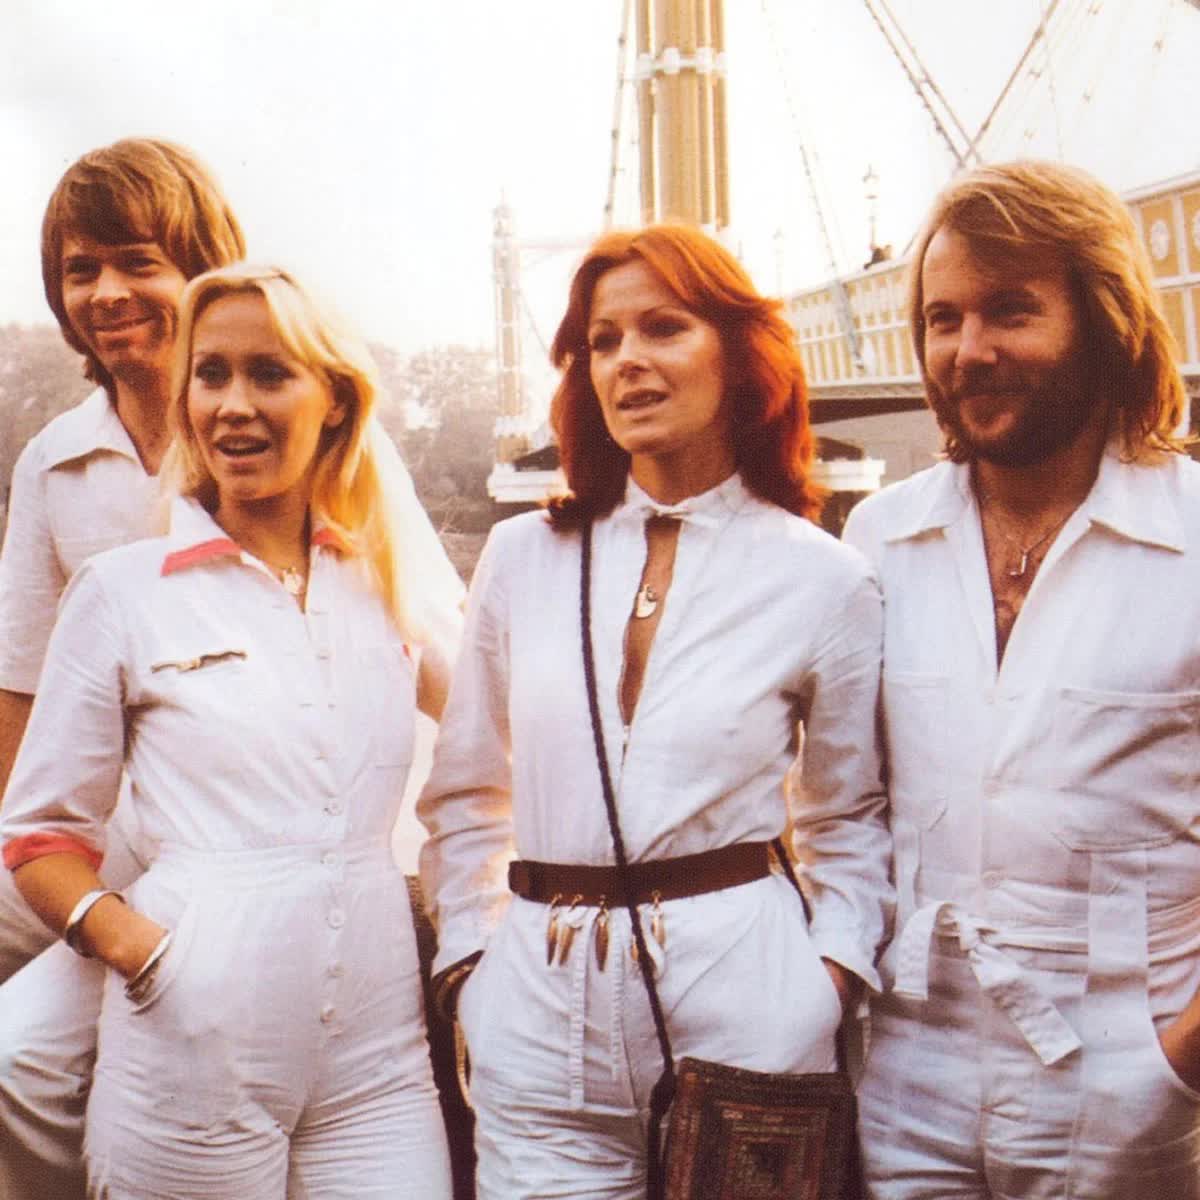 La banda ABBA. 80-е